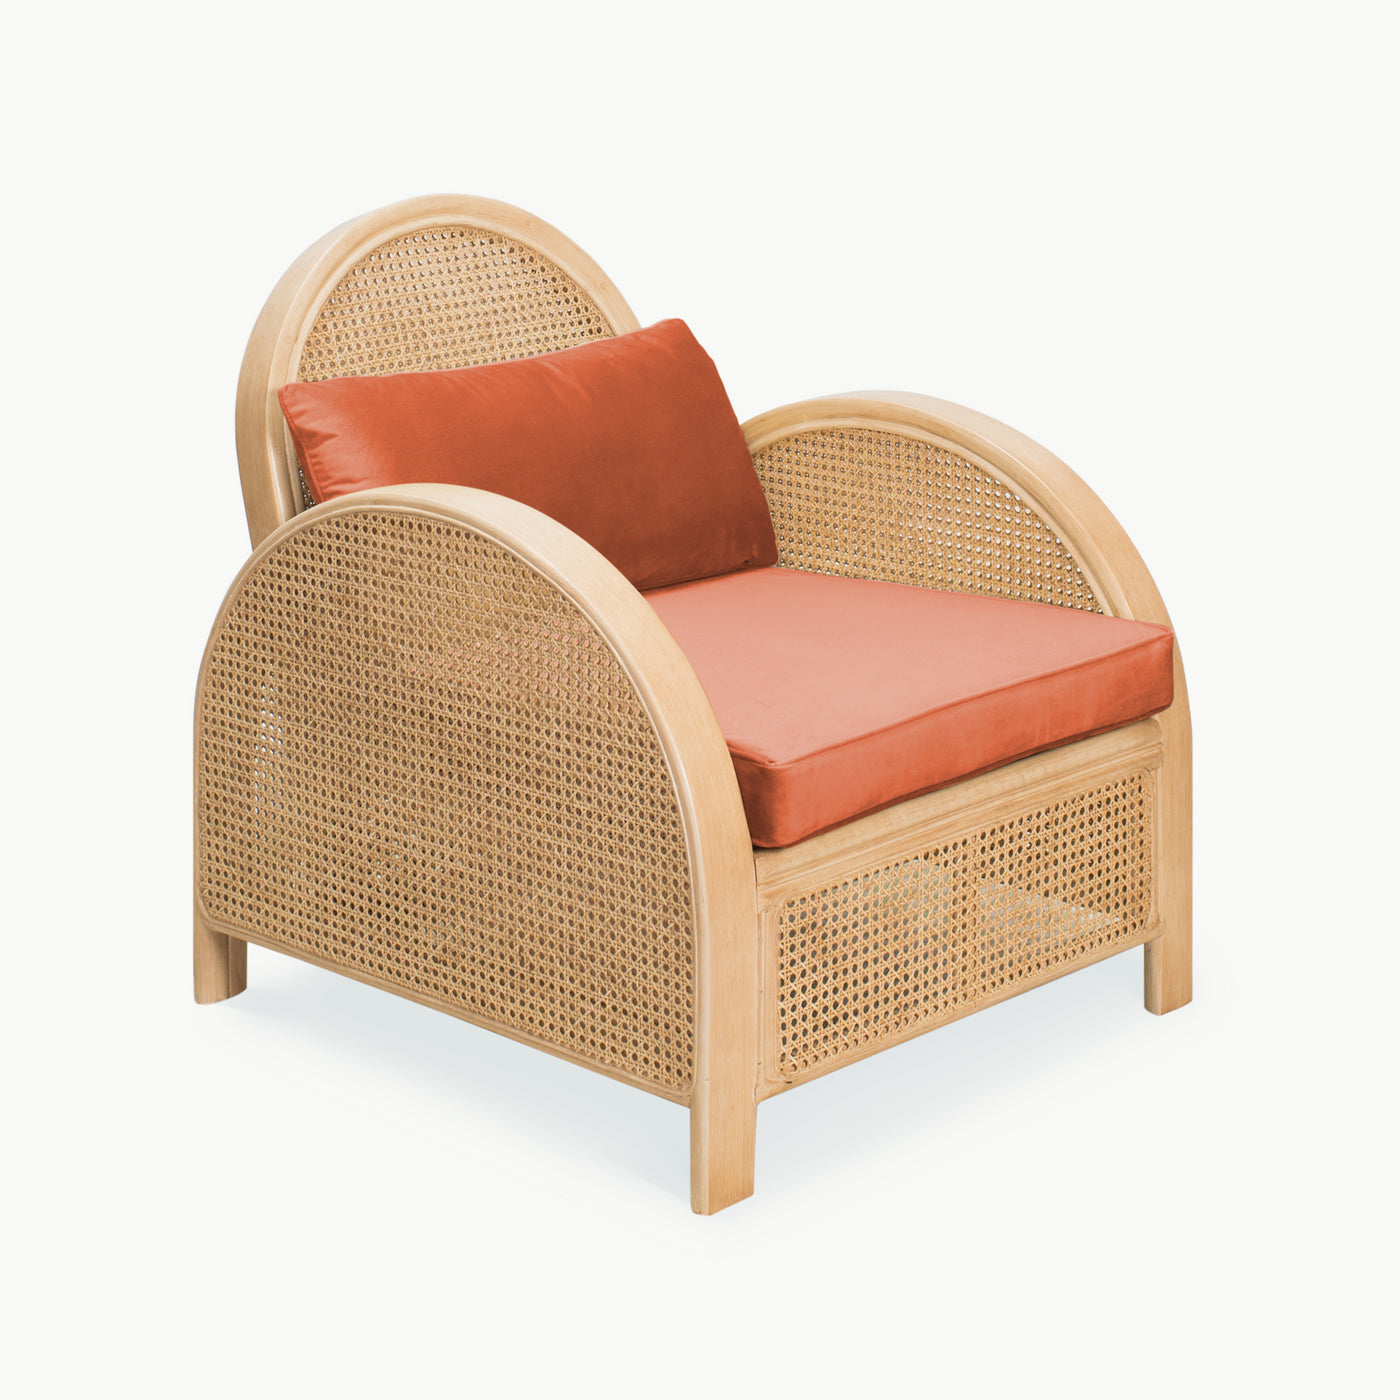 THE BOTANIST Cane Chair - Sienna